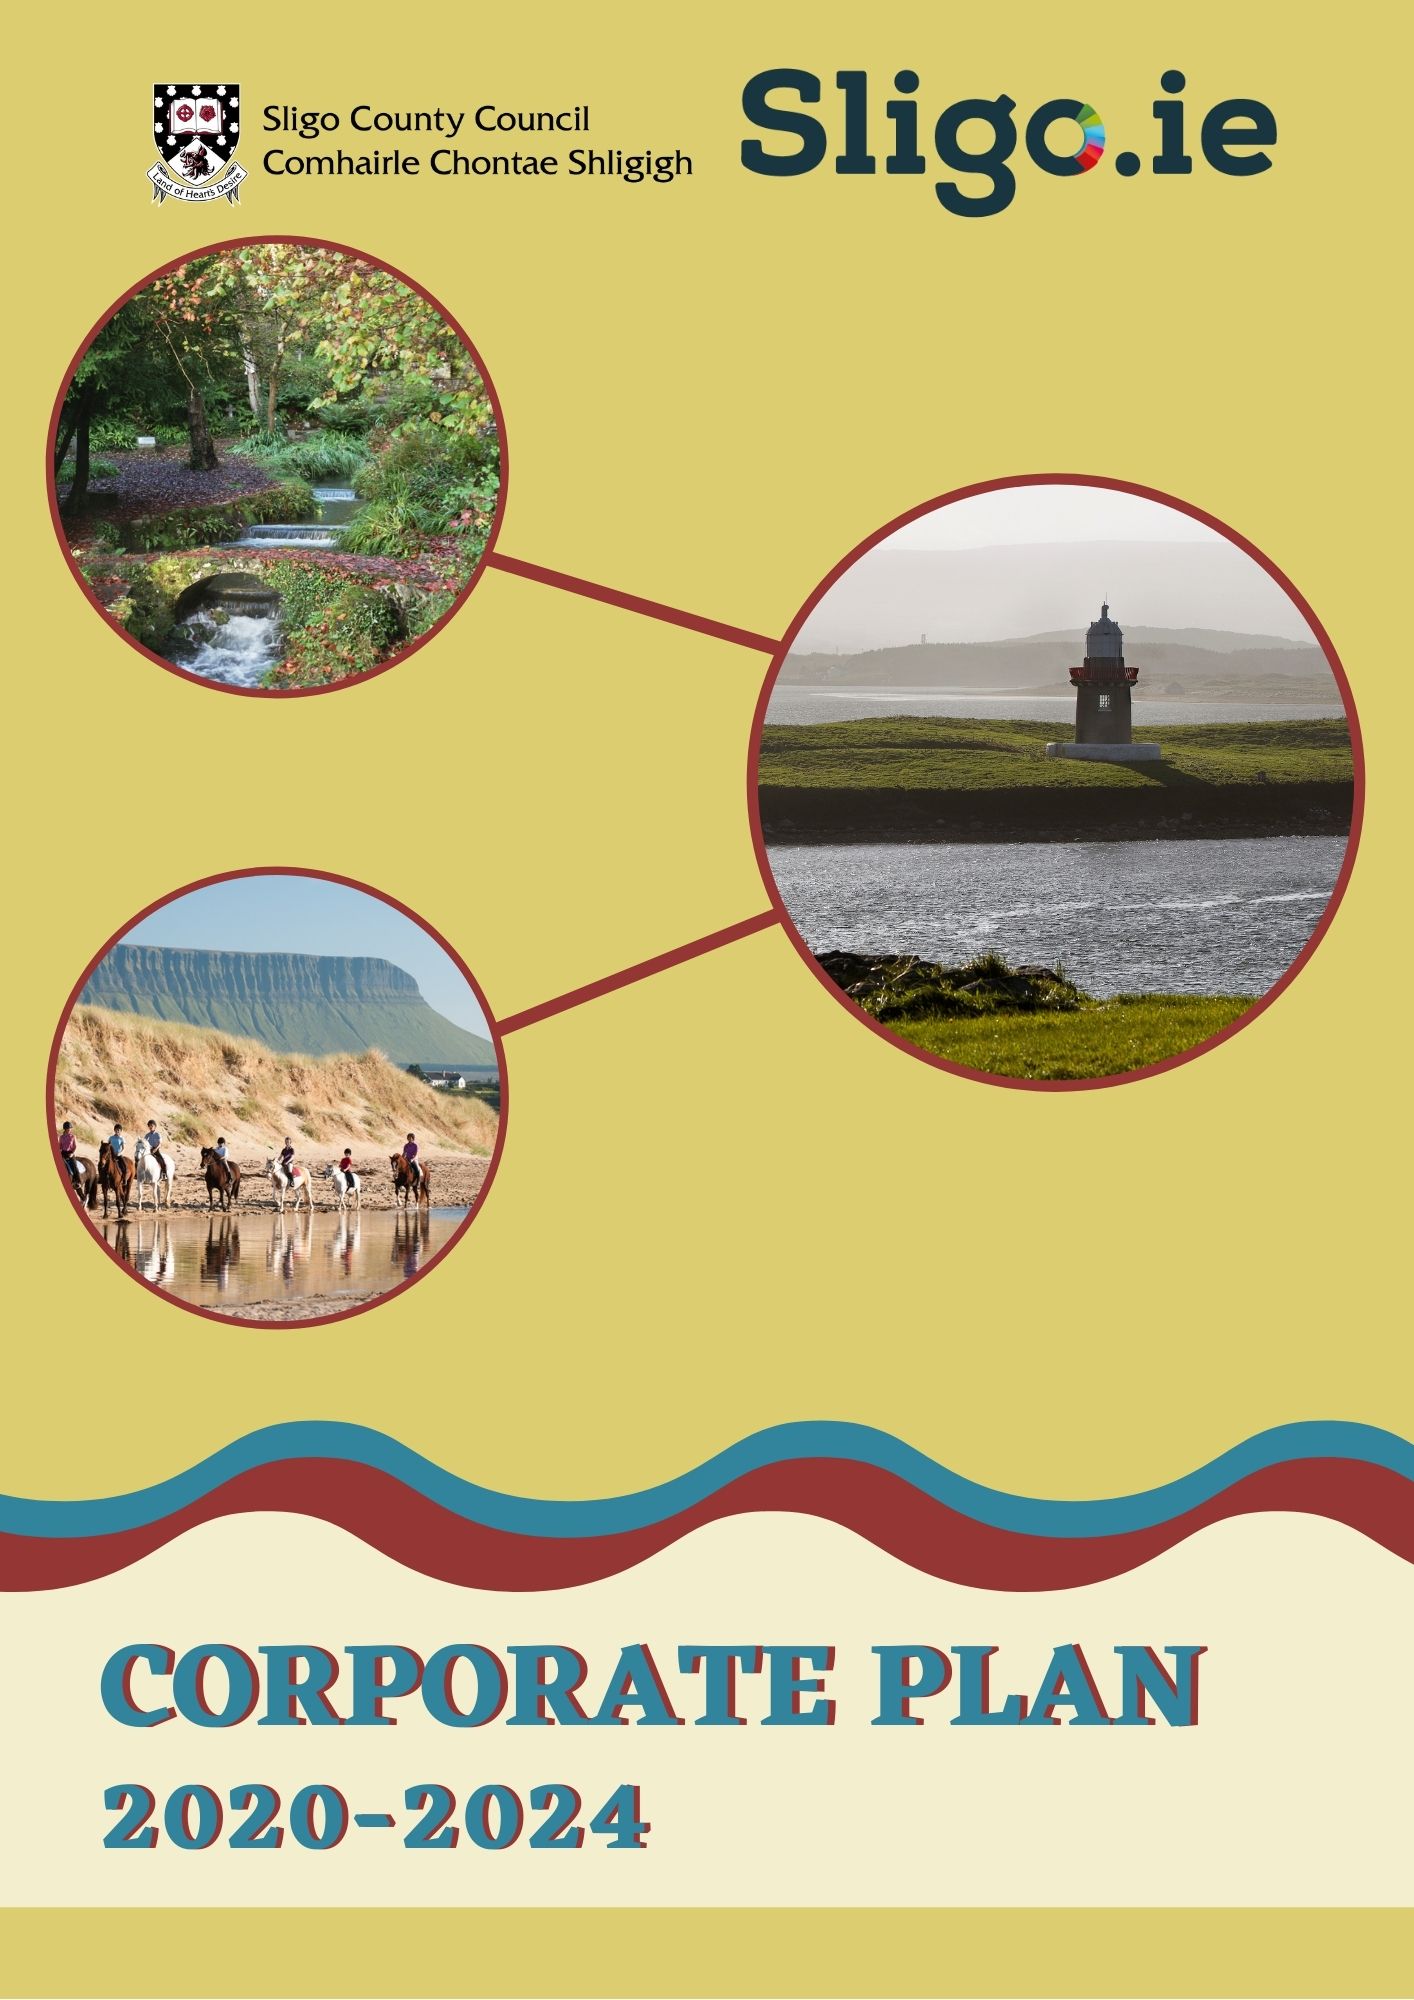 Corporate Plan 2020-2024